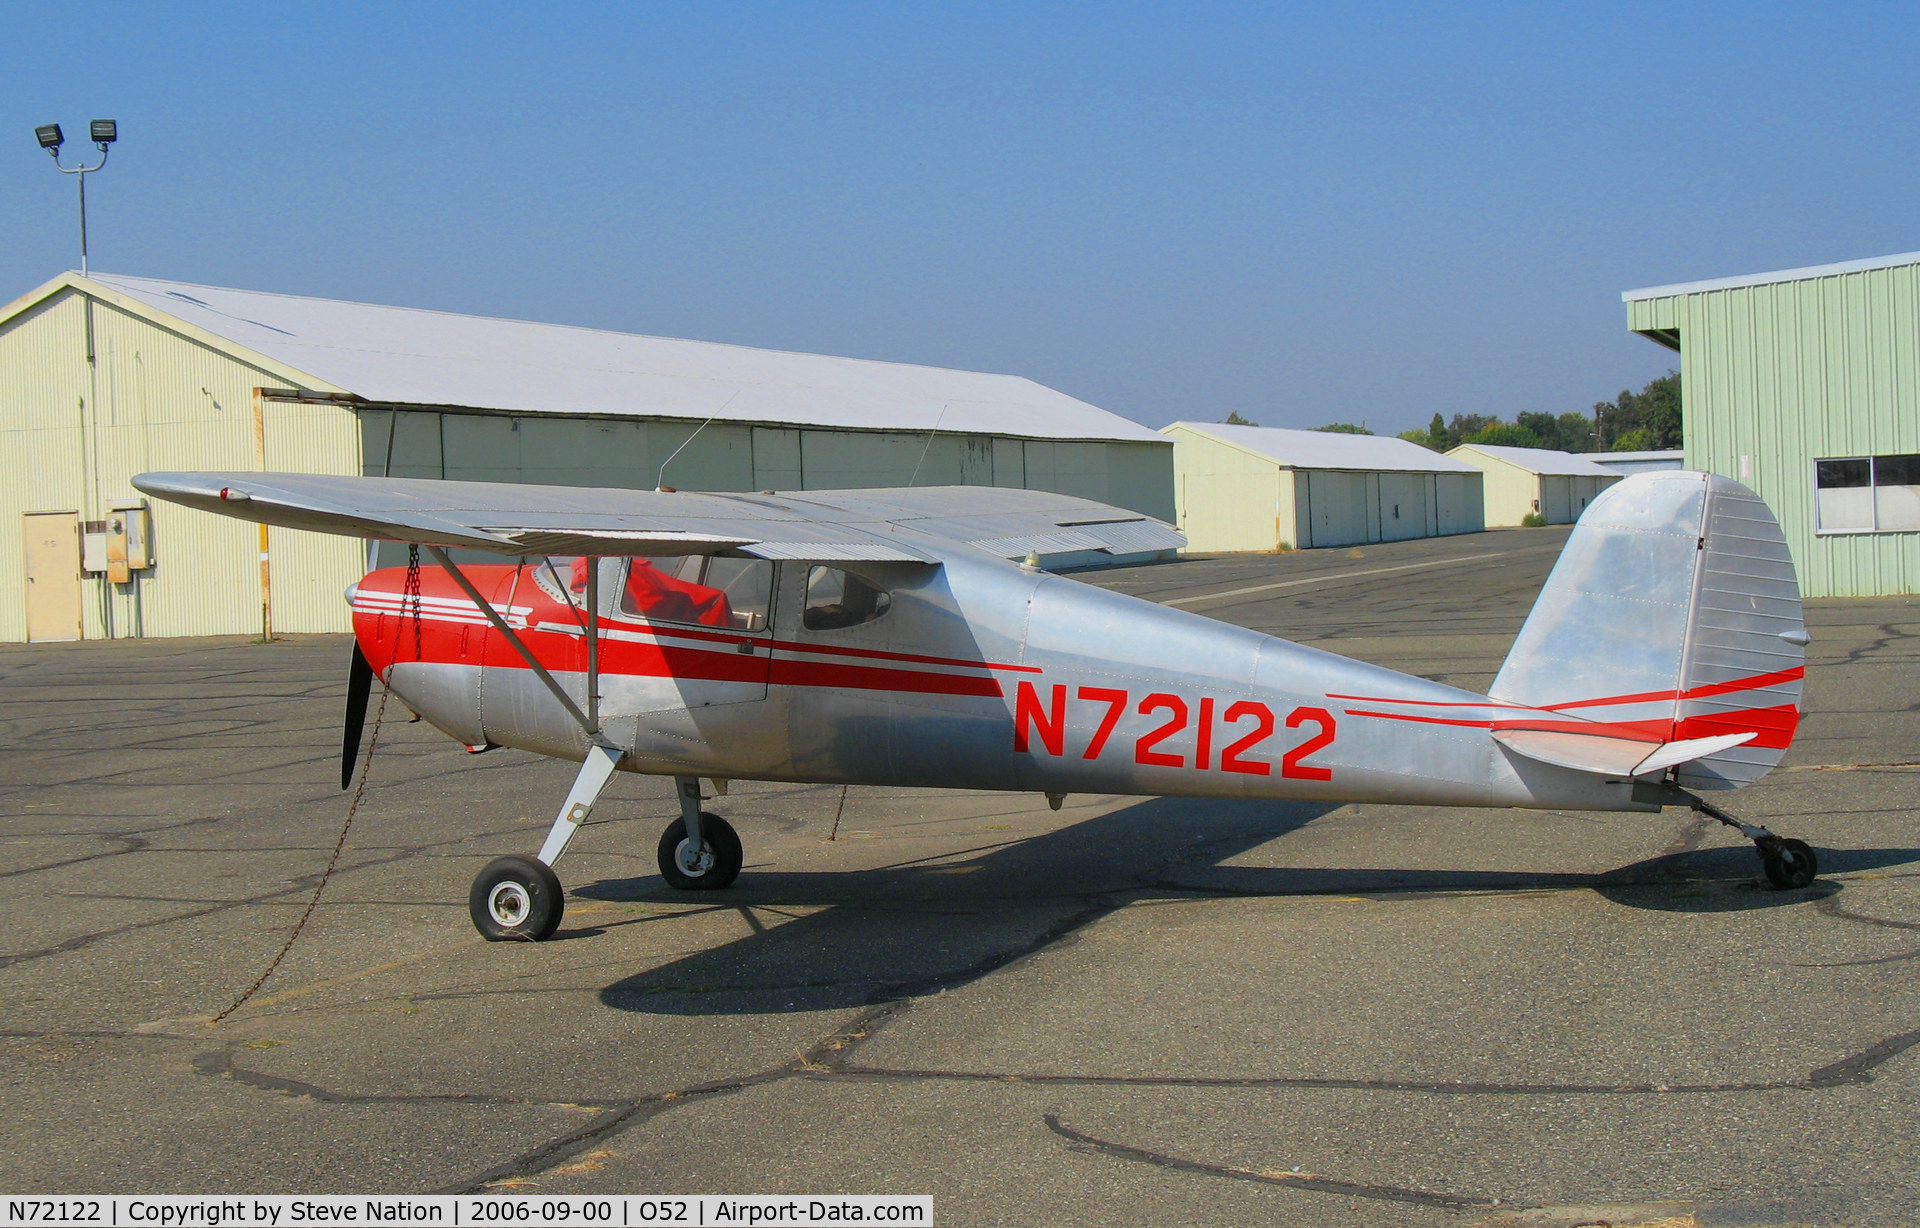 N72122, 1946 Cessna 140 C/N 9289, 1946 Cessna 140 @ Sutter County Airport (Yuba City), CA